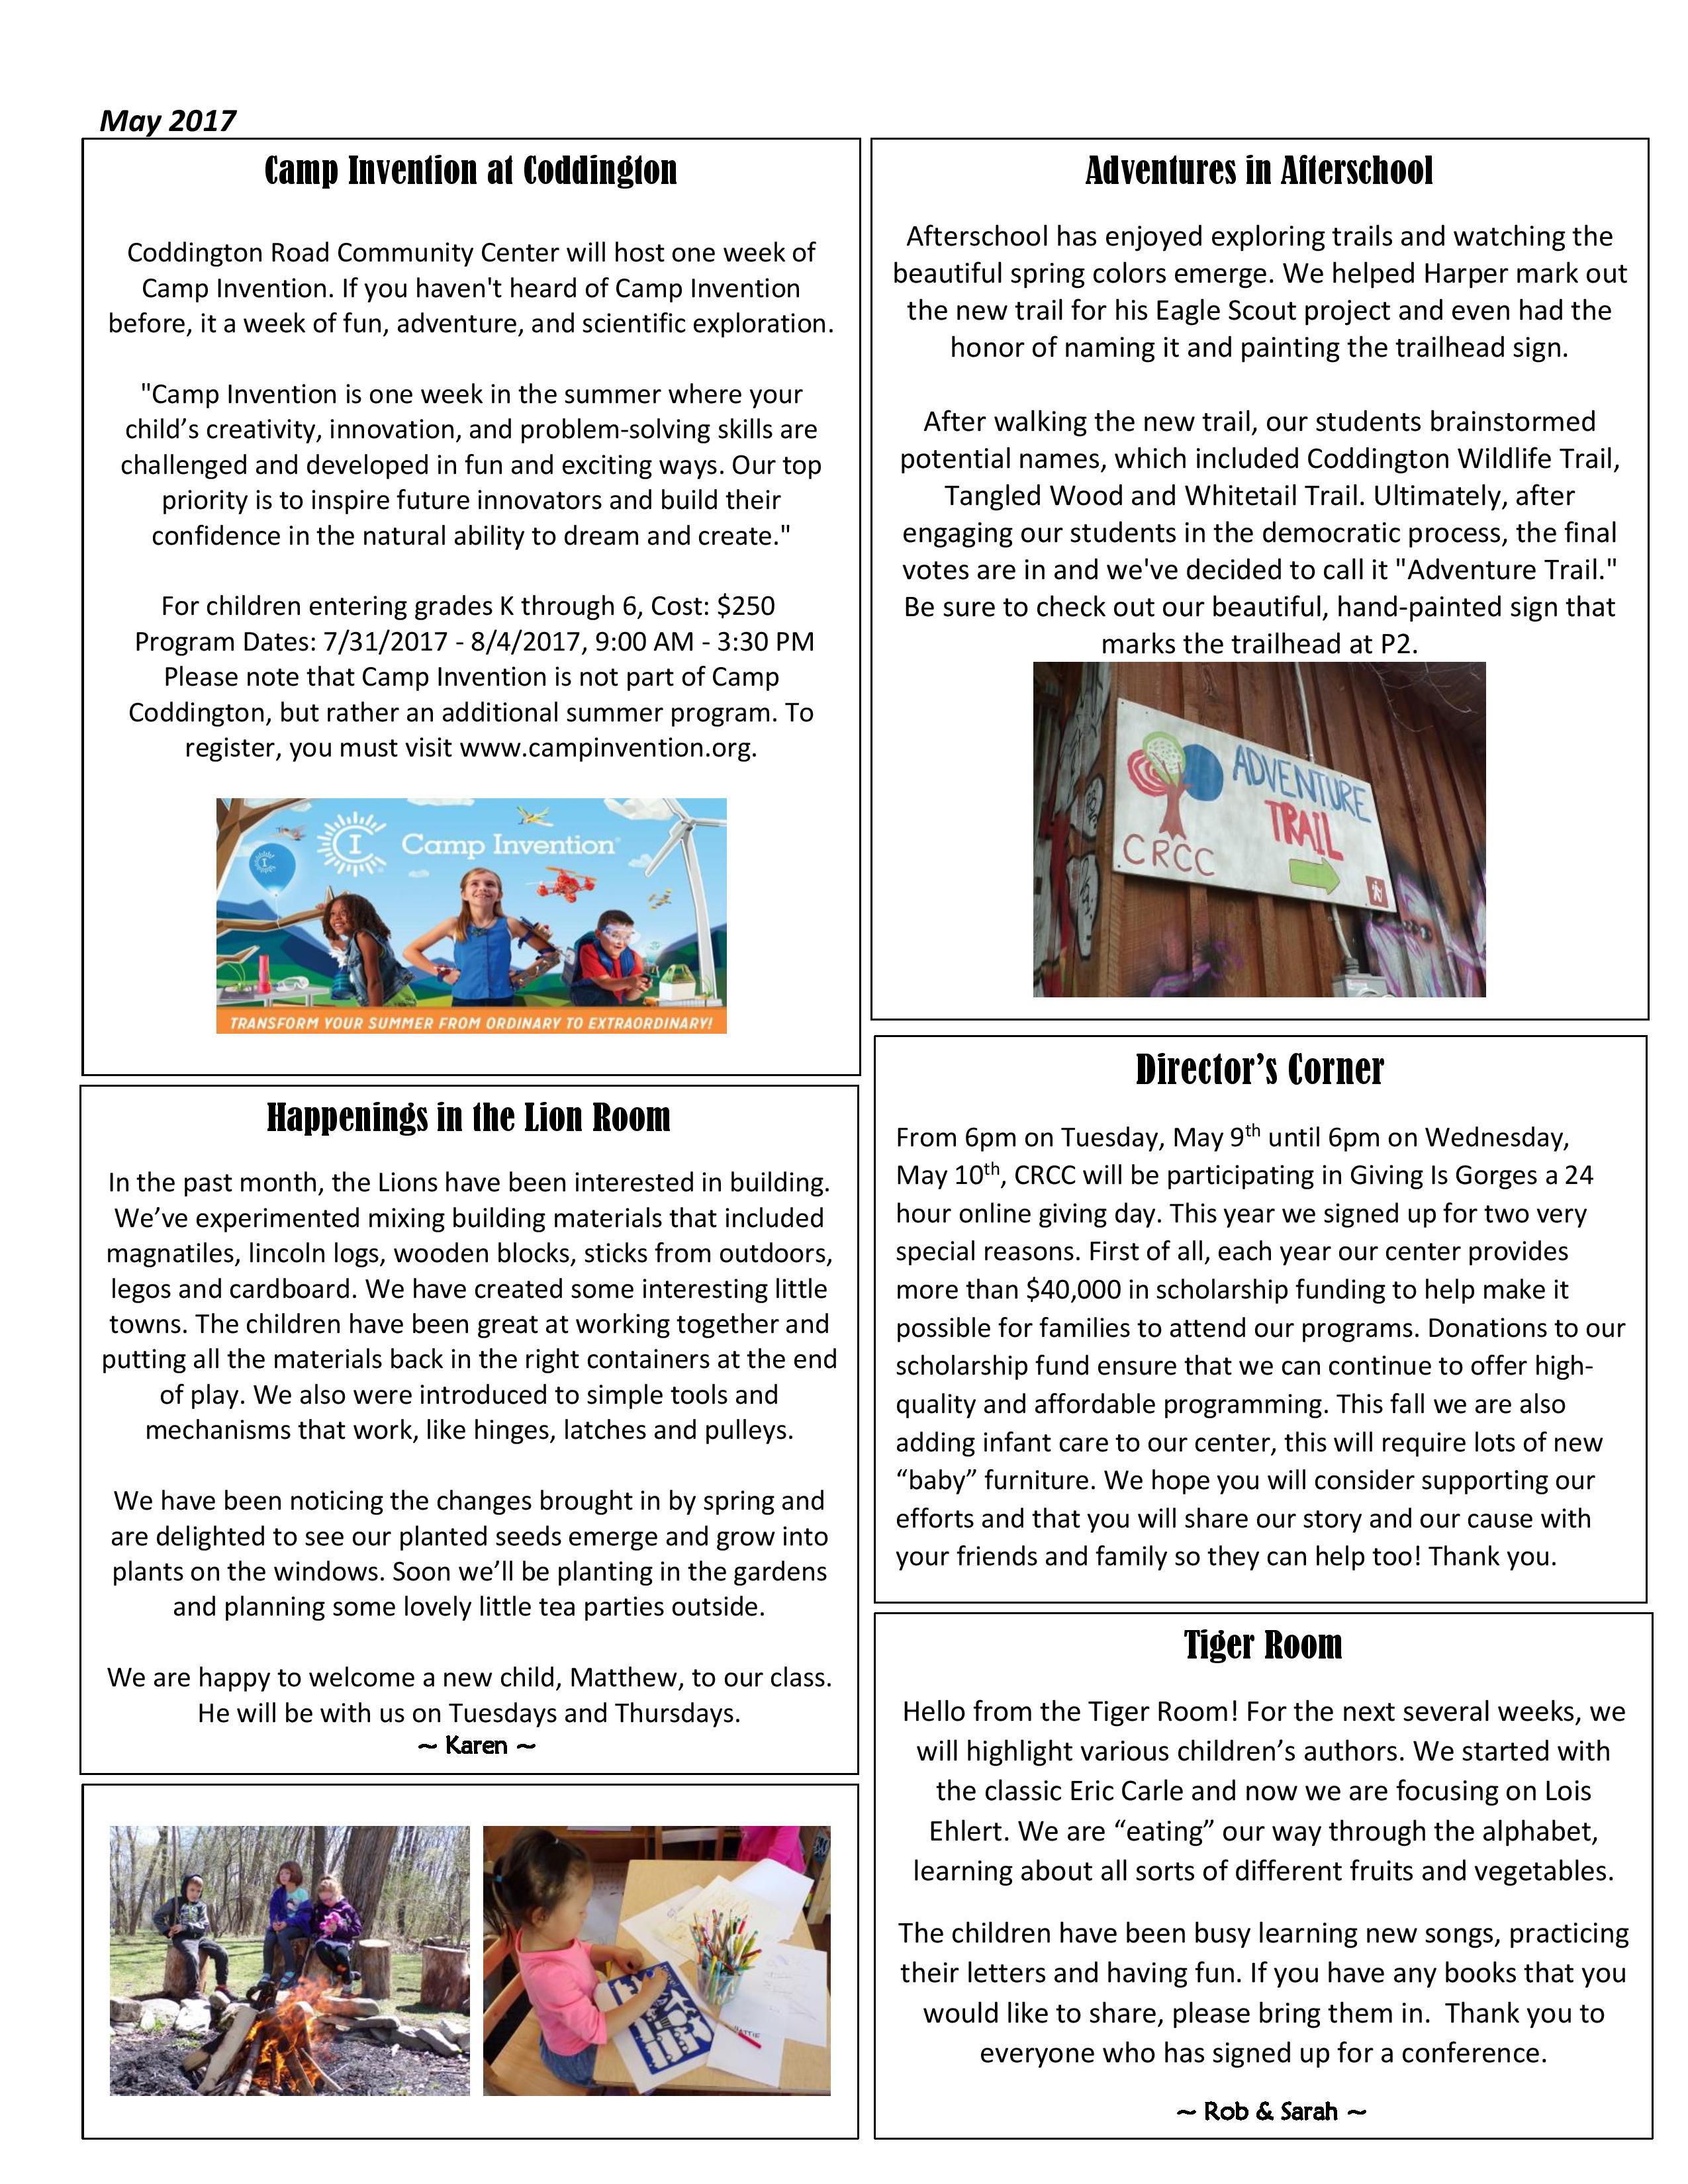 Monthly newsletter for the Coddington Road Community Center